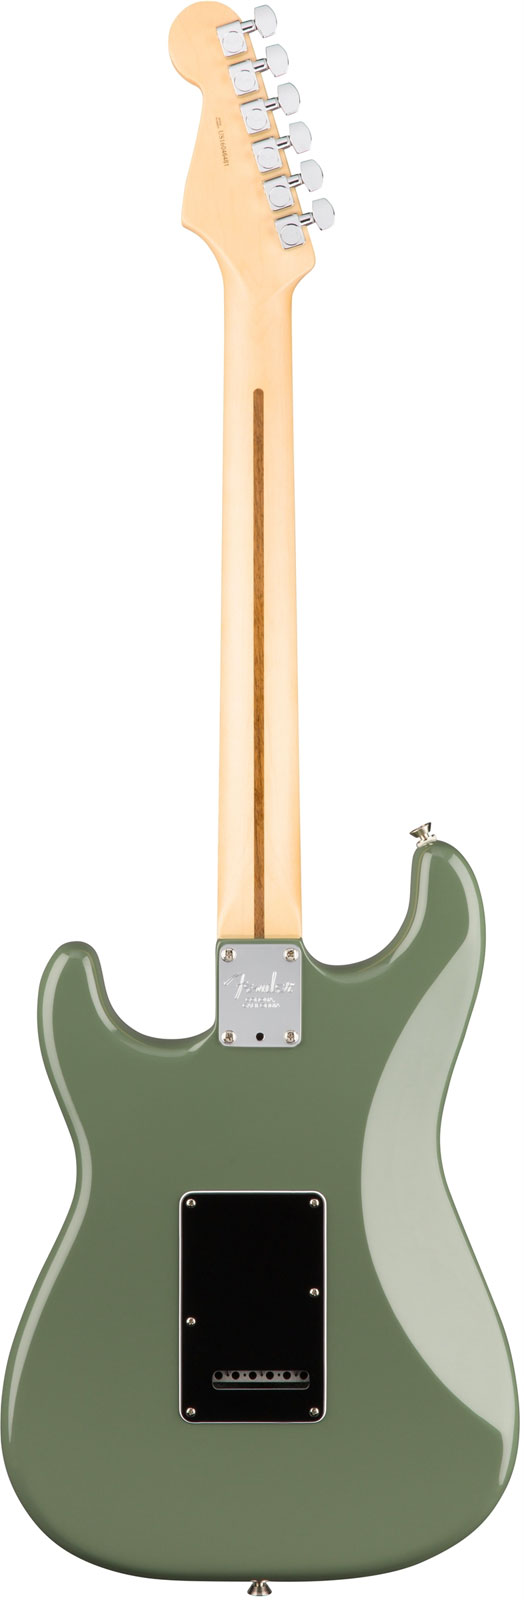 Fender Strat American Professional 2017 3s Usa Rw - Antique Olive - Str shape electric guitar - Variation 2